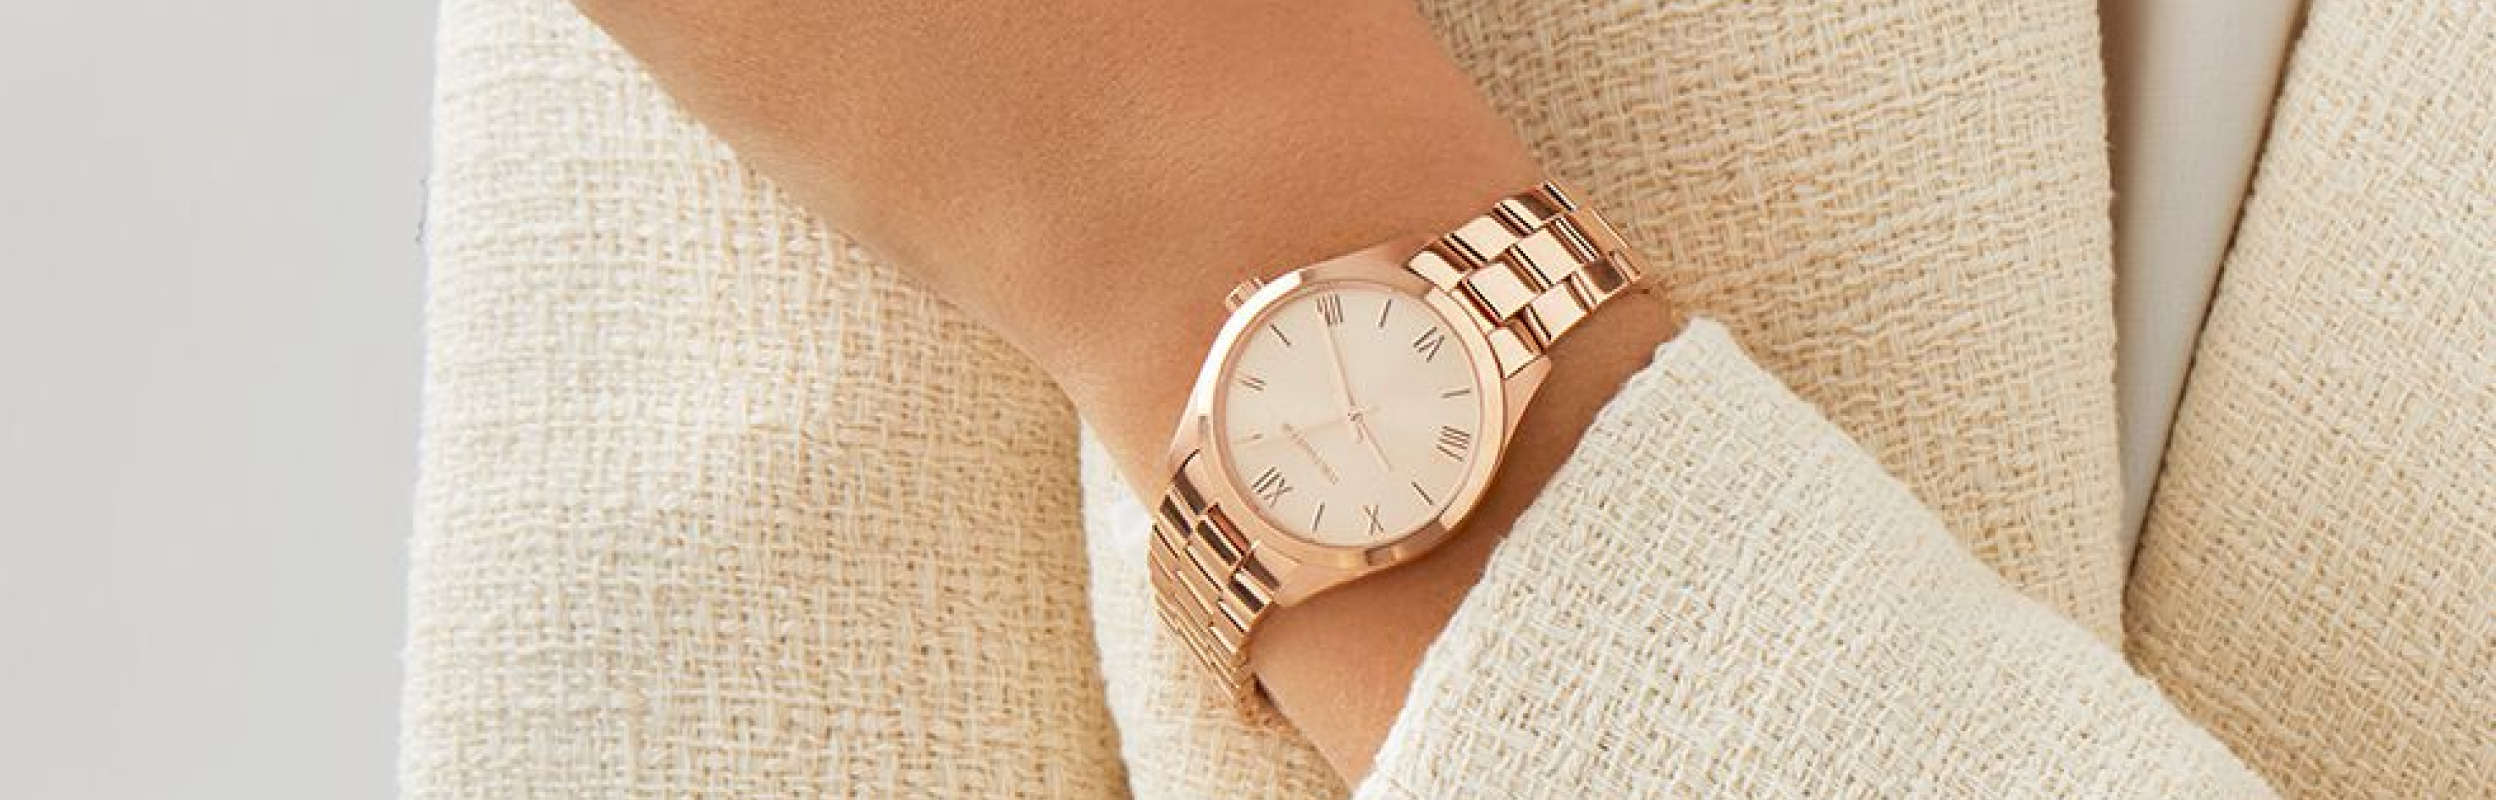 woman wearing rose gold watch